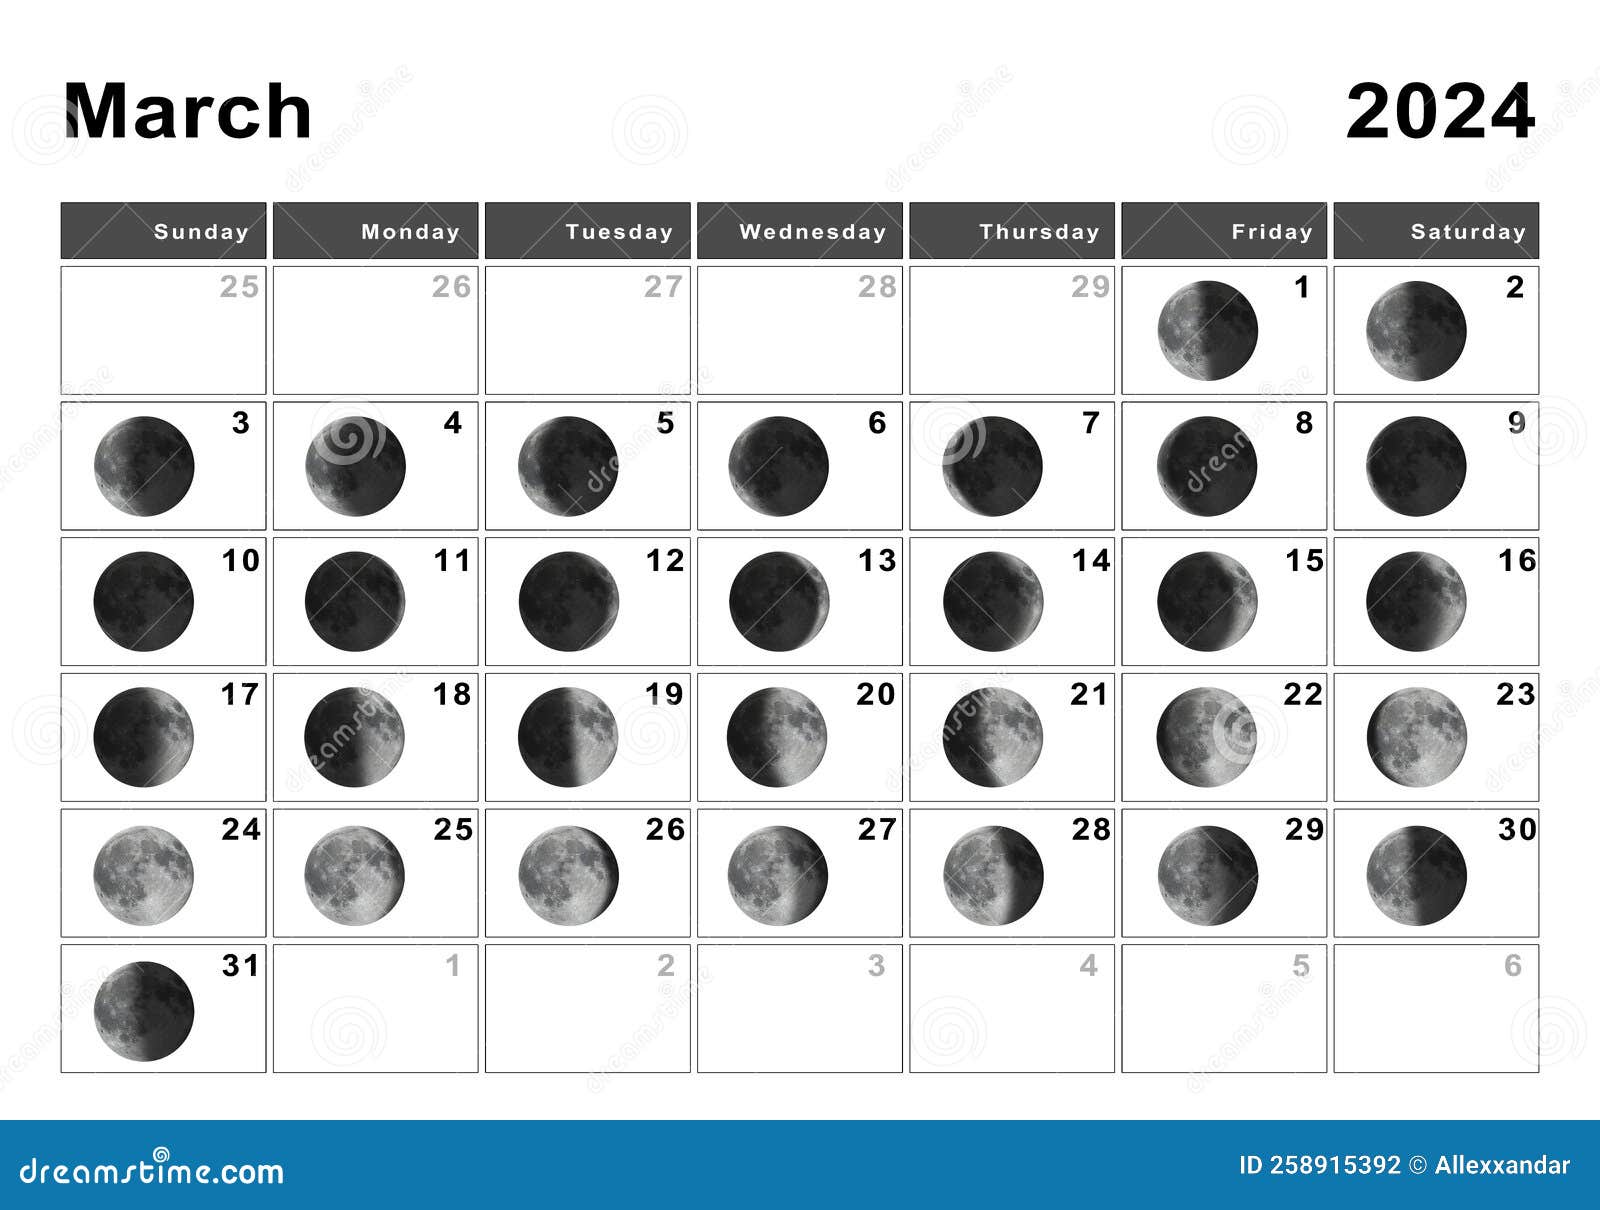 March 2024 Calendar With Moon Phases 2024 CALENDAR PRINTABLE